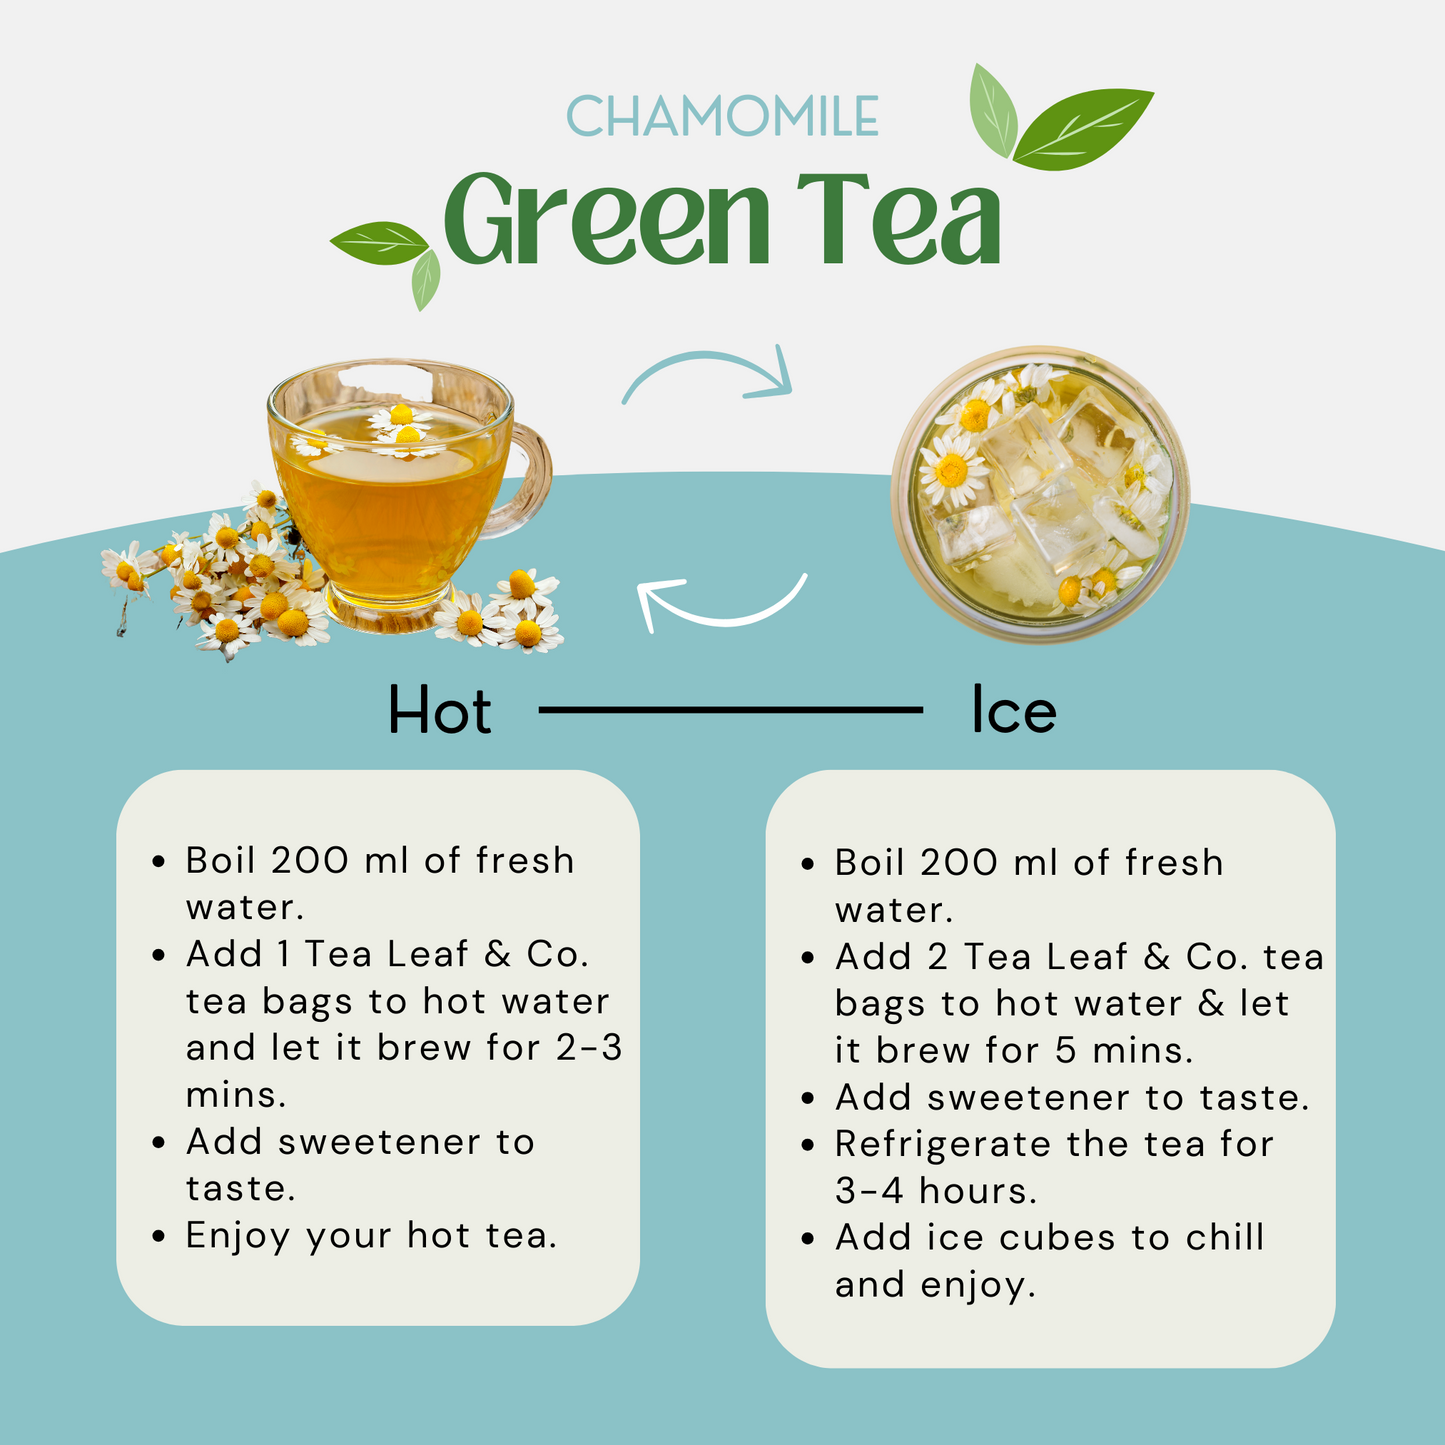 Chamomile Green Tea - 25 Tea Bags